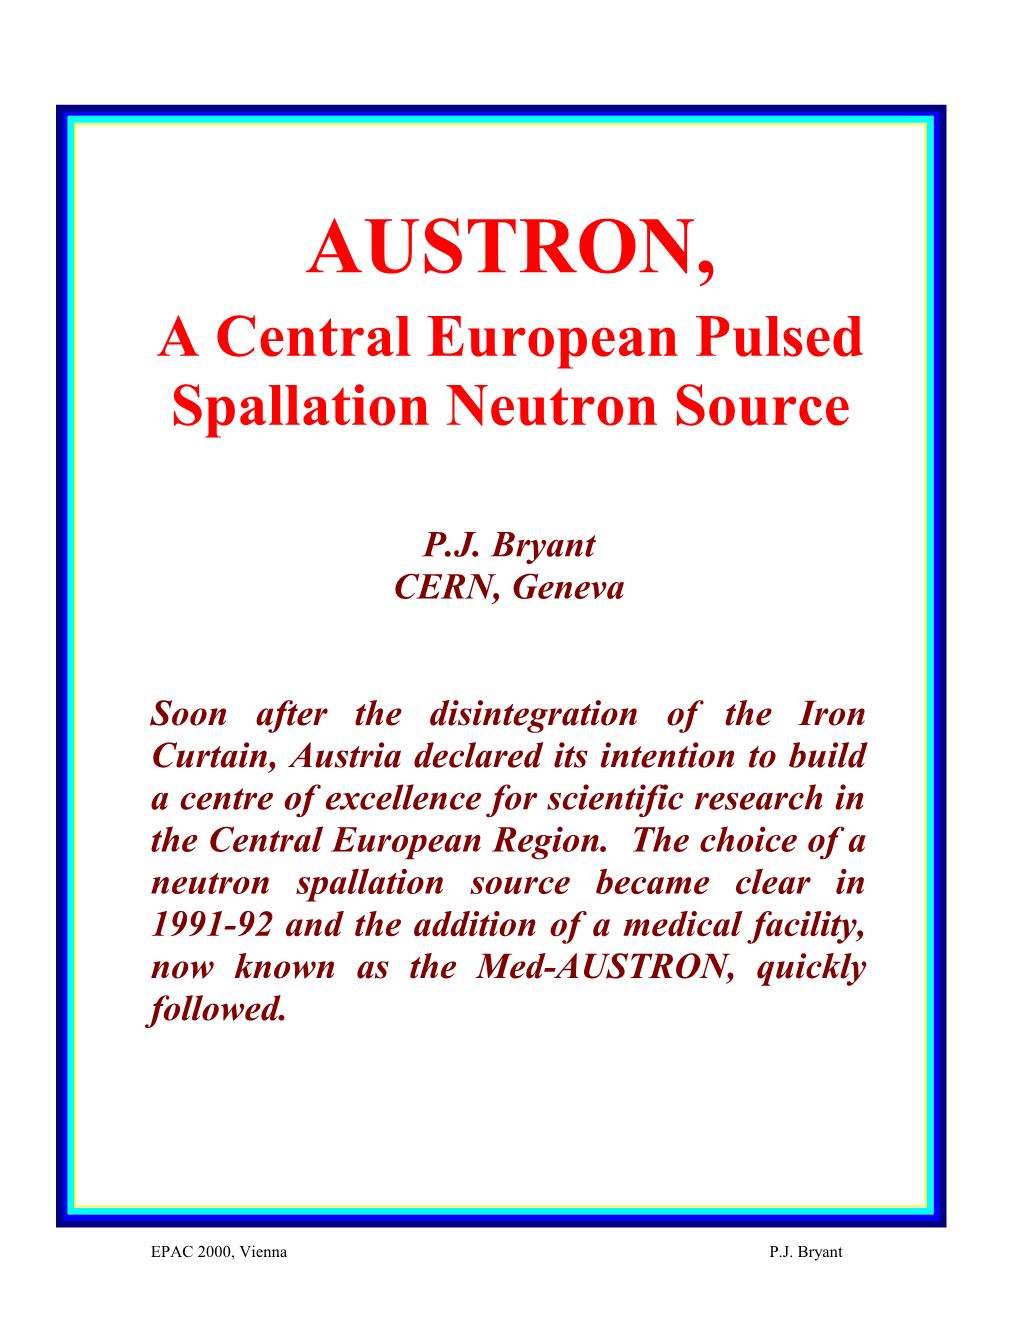 A Central European Pulsed Spallation Neutron Source